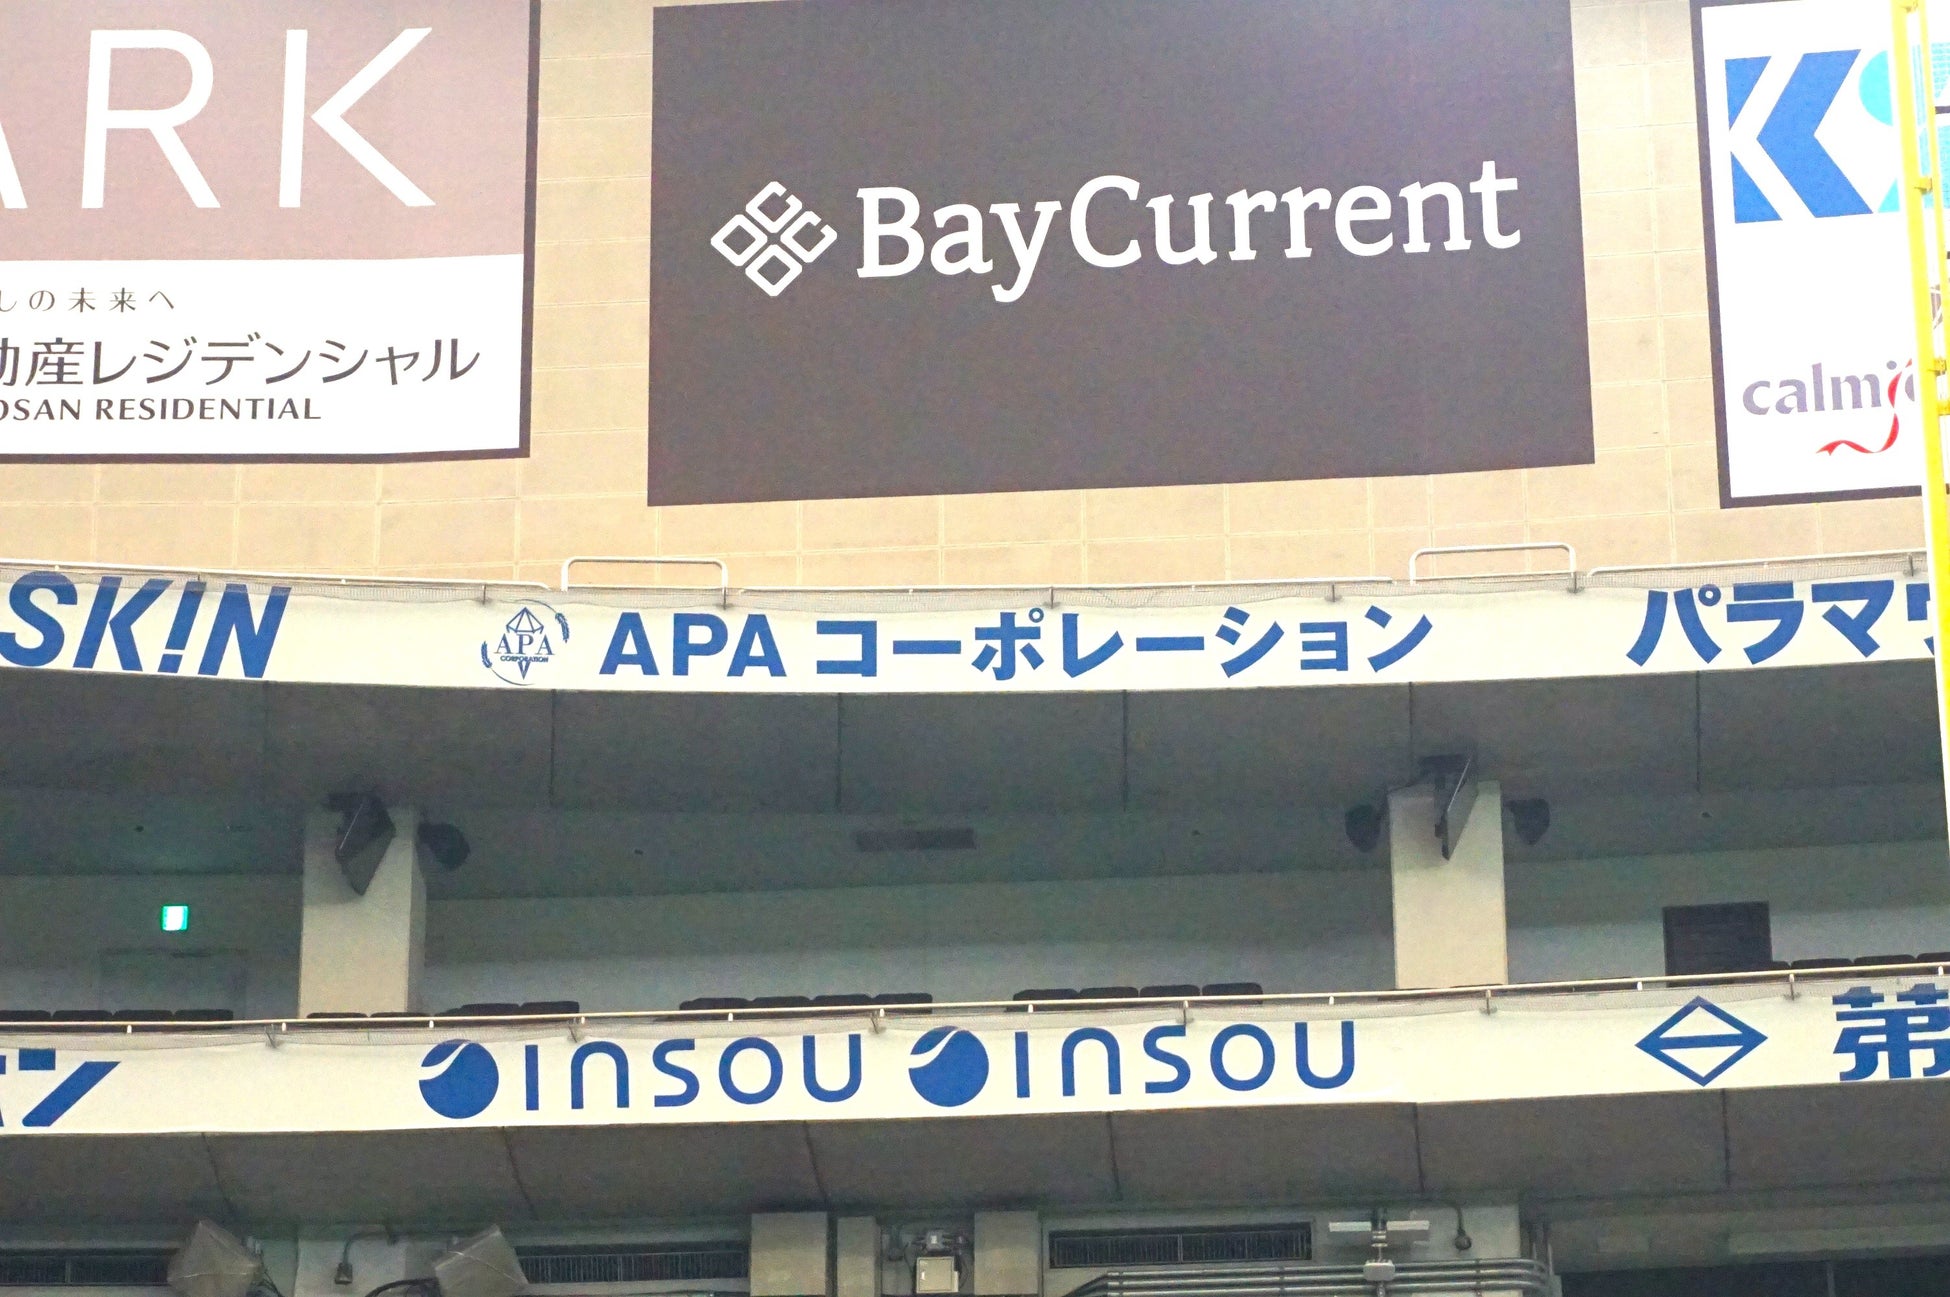 APA コーポレーションは東京ドーム内に広告看板を掲出